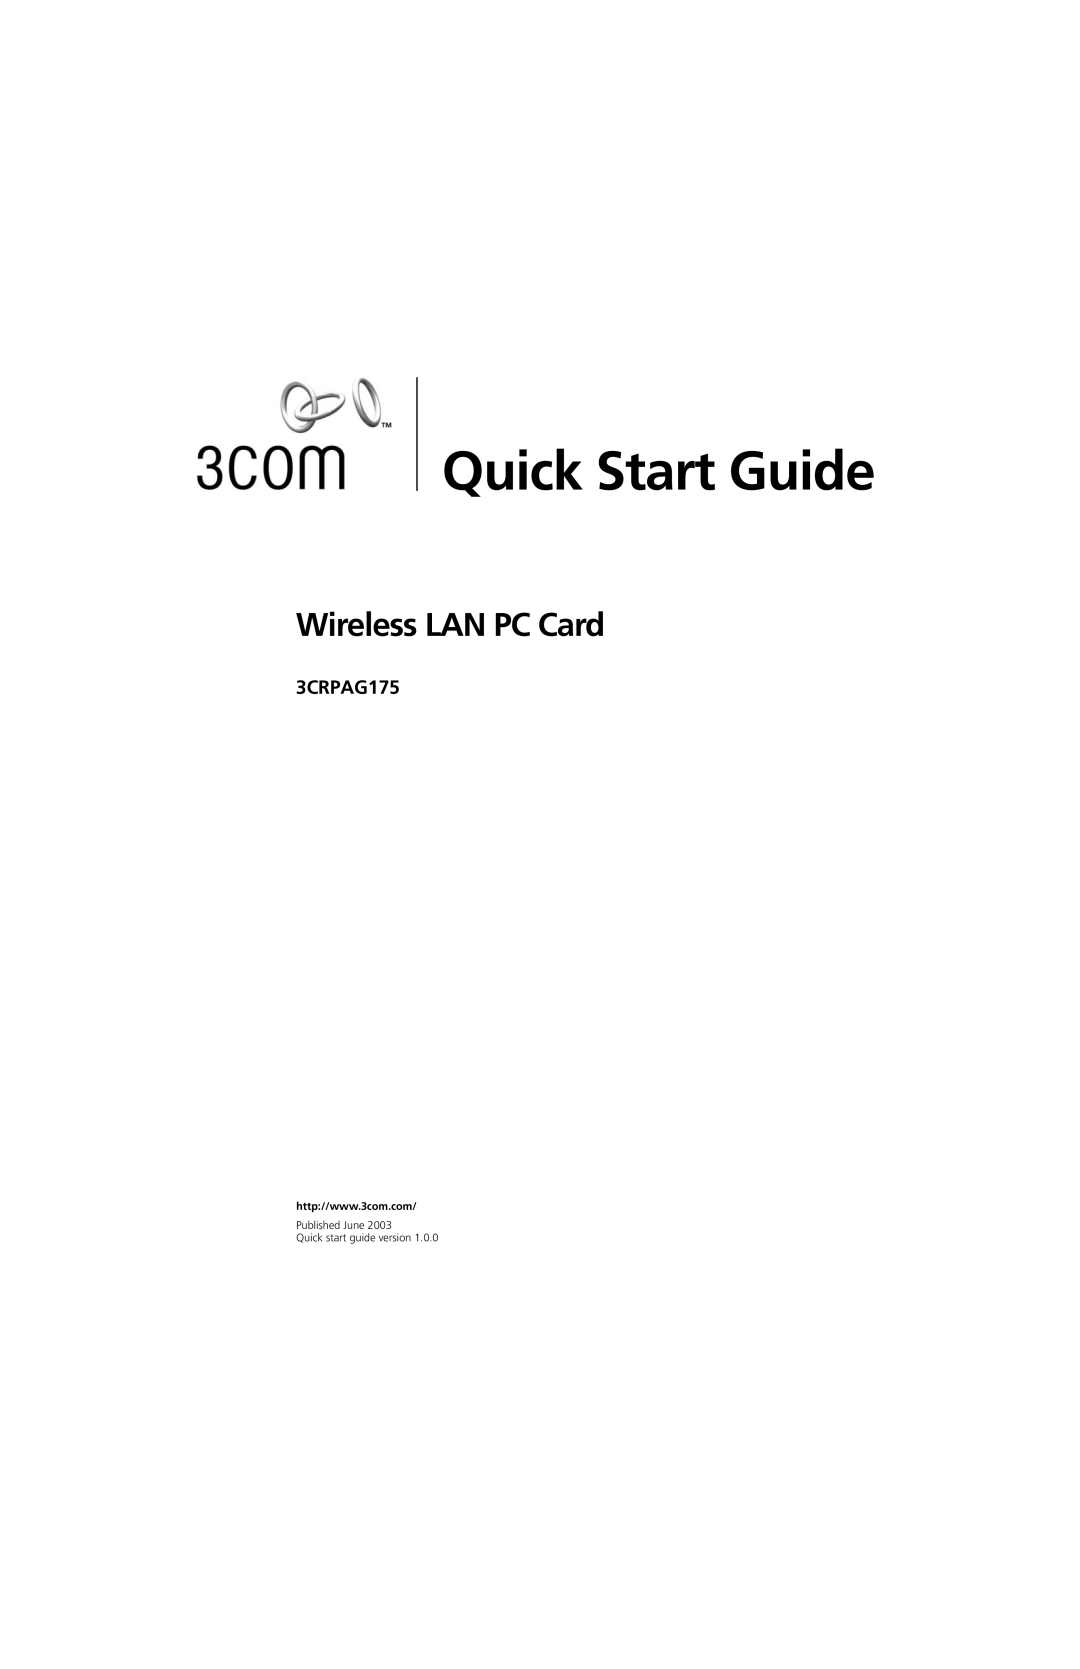 3Com 3CRPAG175 quick start Quick Start Guide, Wireless LAN PC Card 